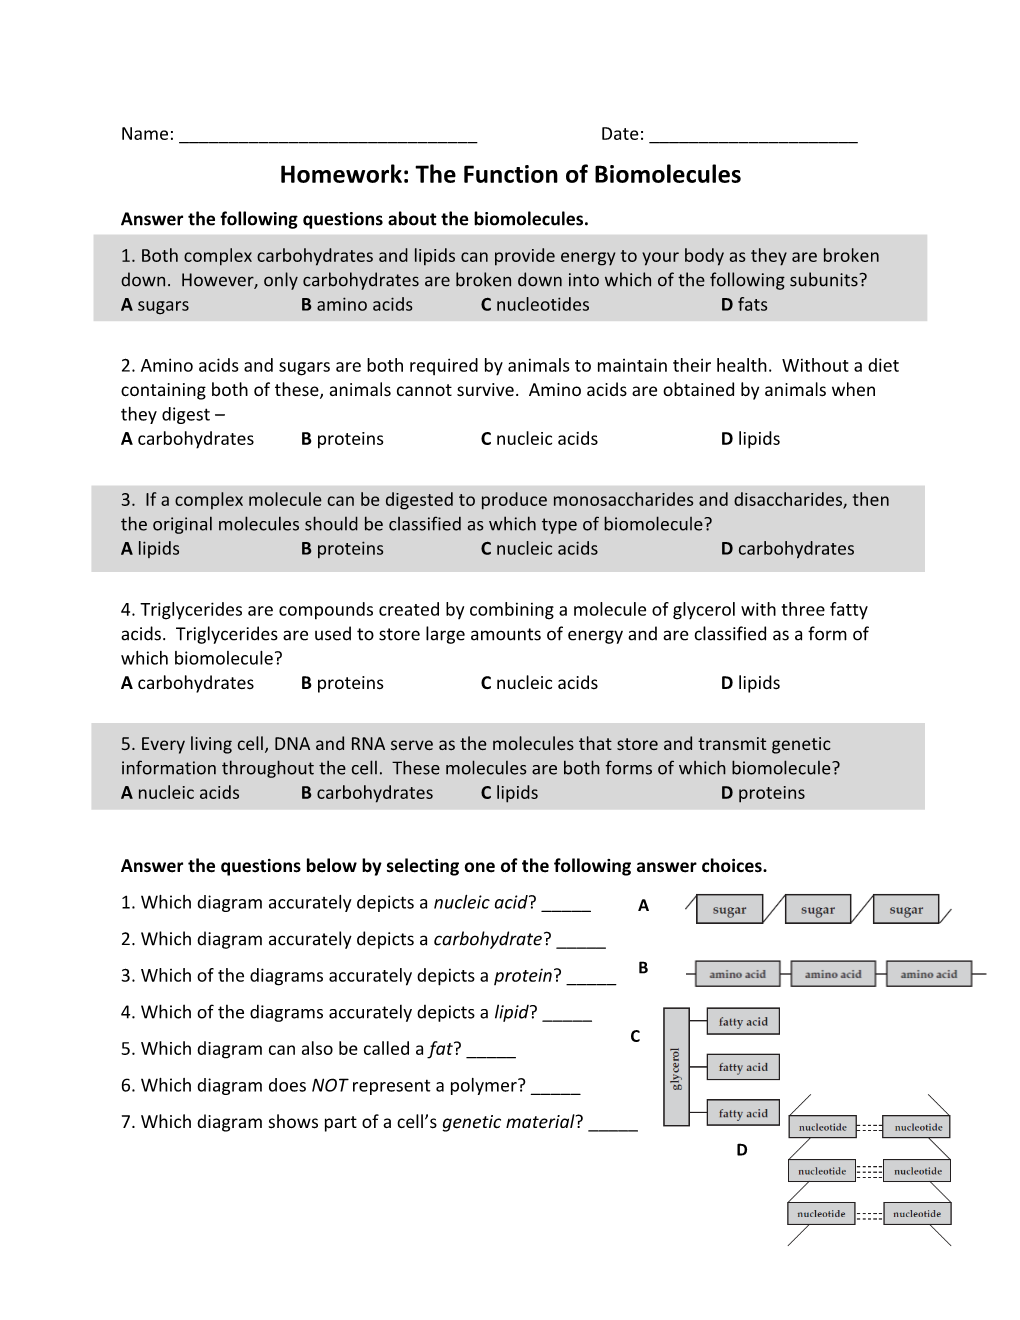 Homework: the Function of Biomolecules